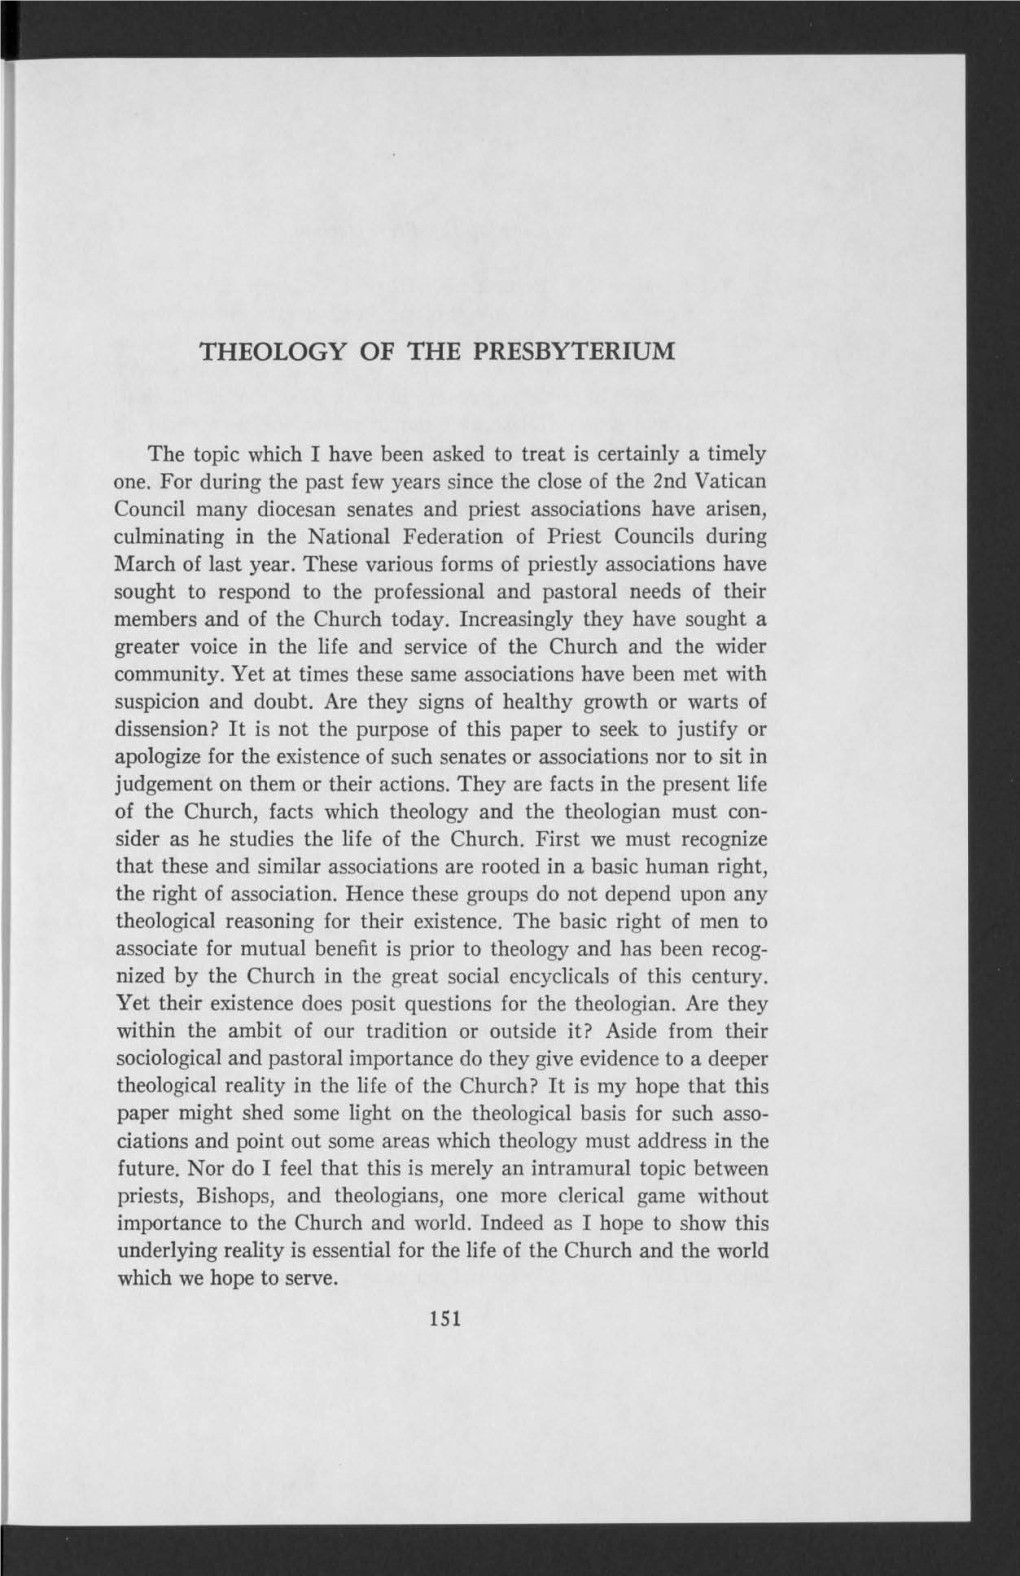 Theology of the Presbyterium